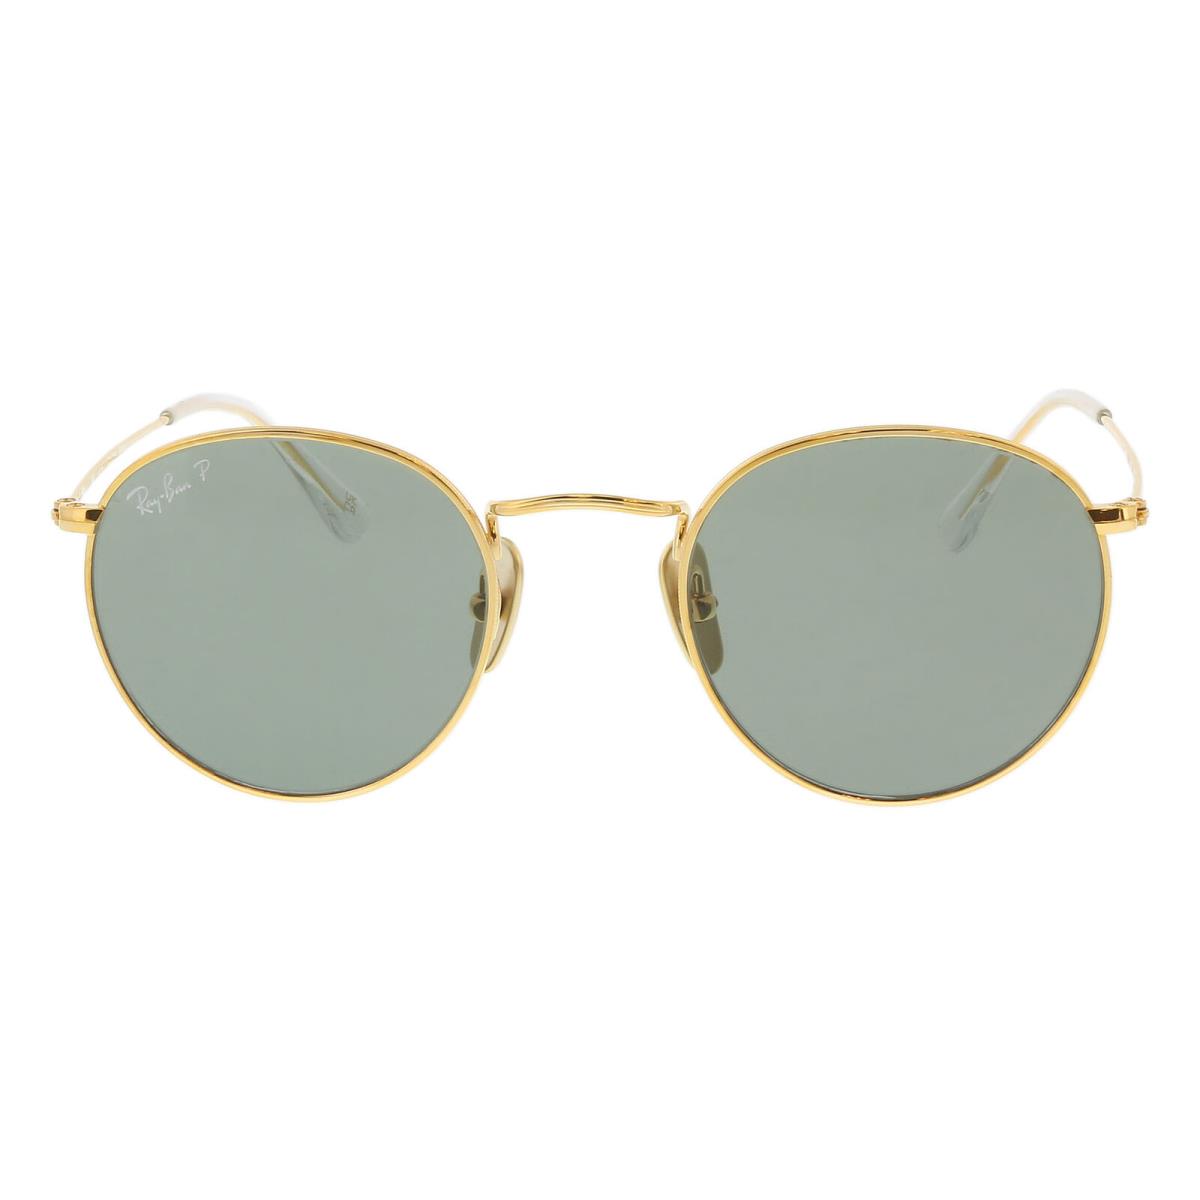 Ray-ban 0RB8247 Titanium Polarized Sunglasses - Gold , Gold Frame